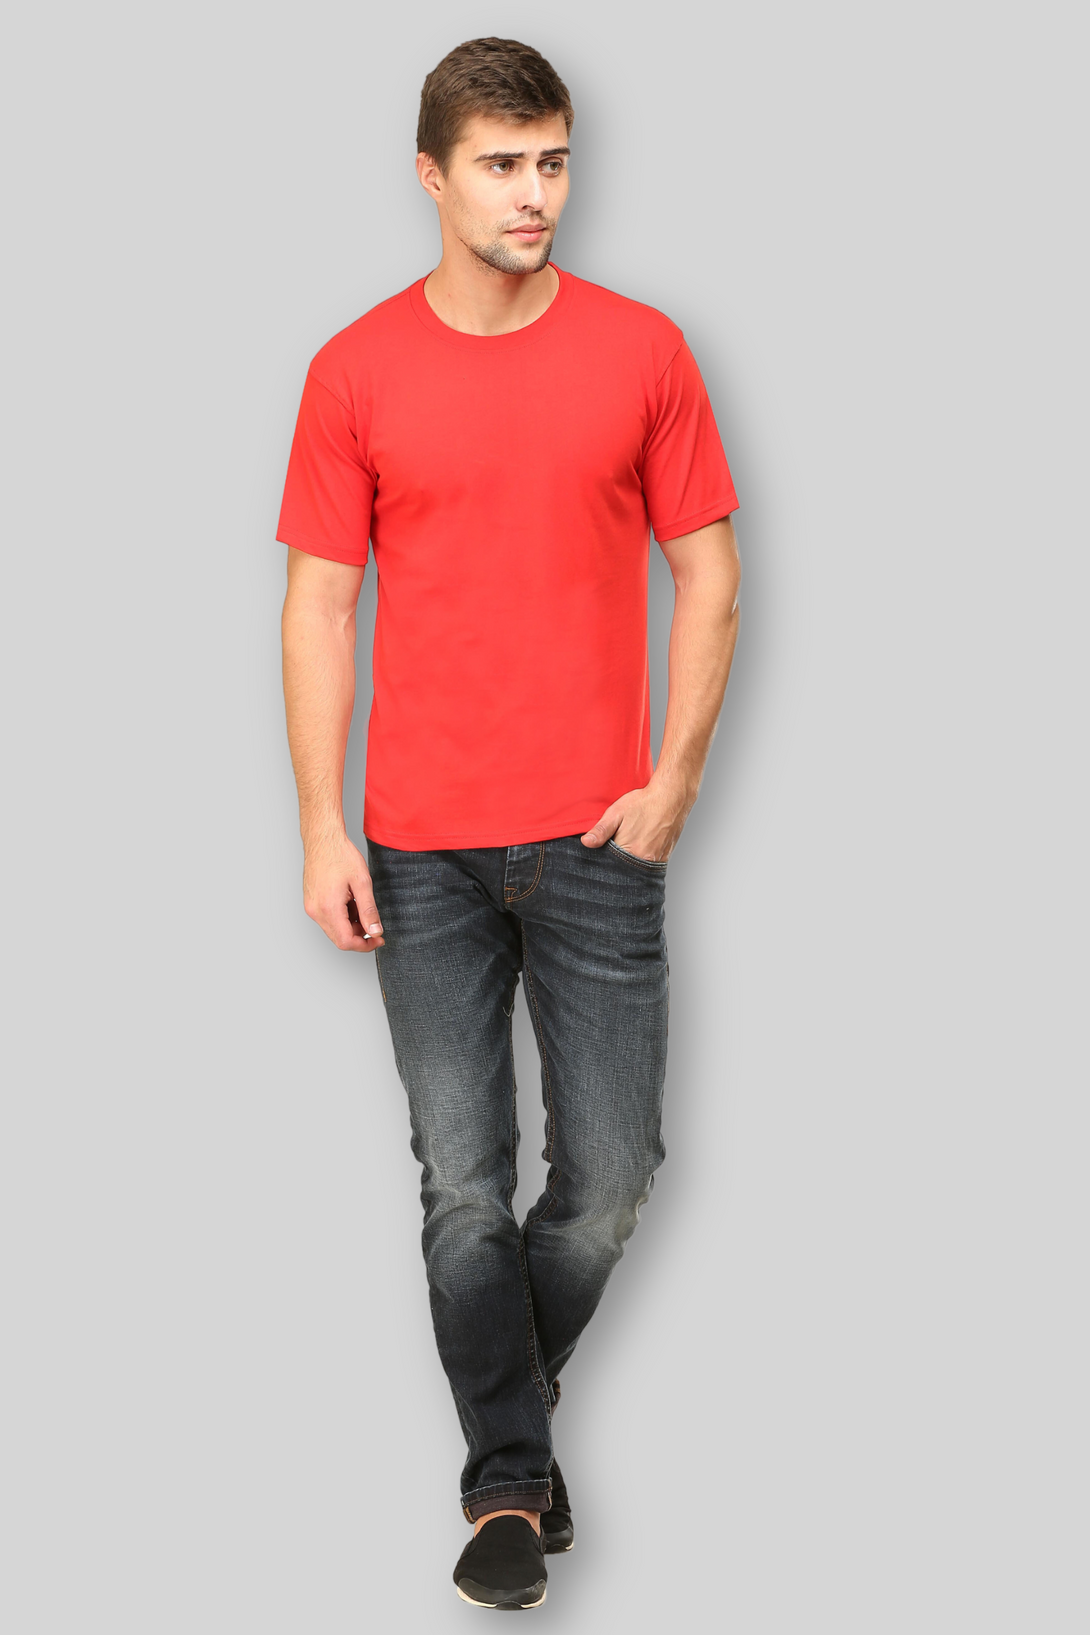 Red T-Shirt For Men - WowWaves - 1